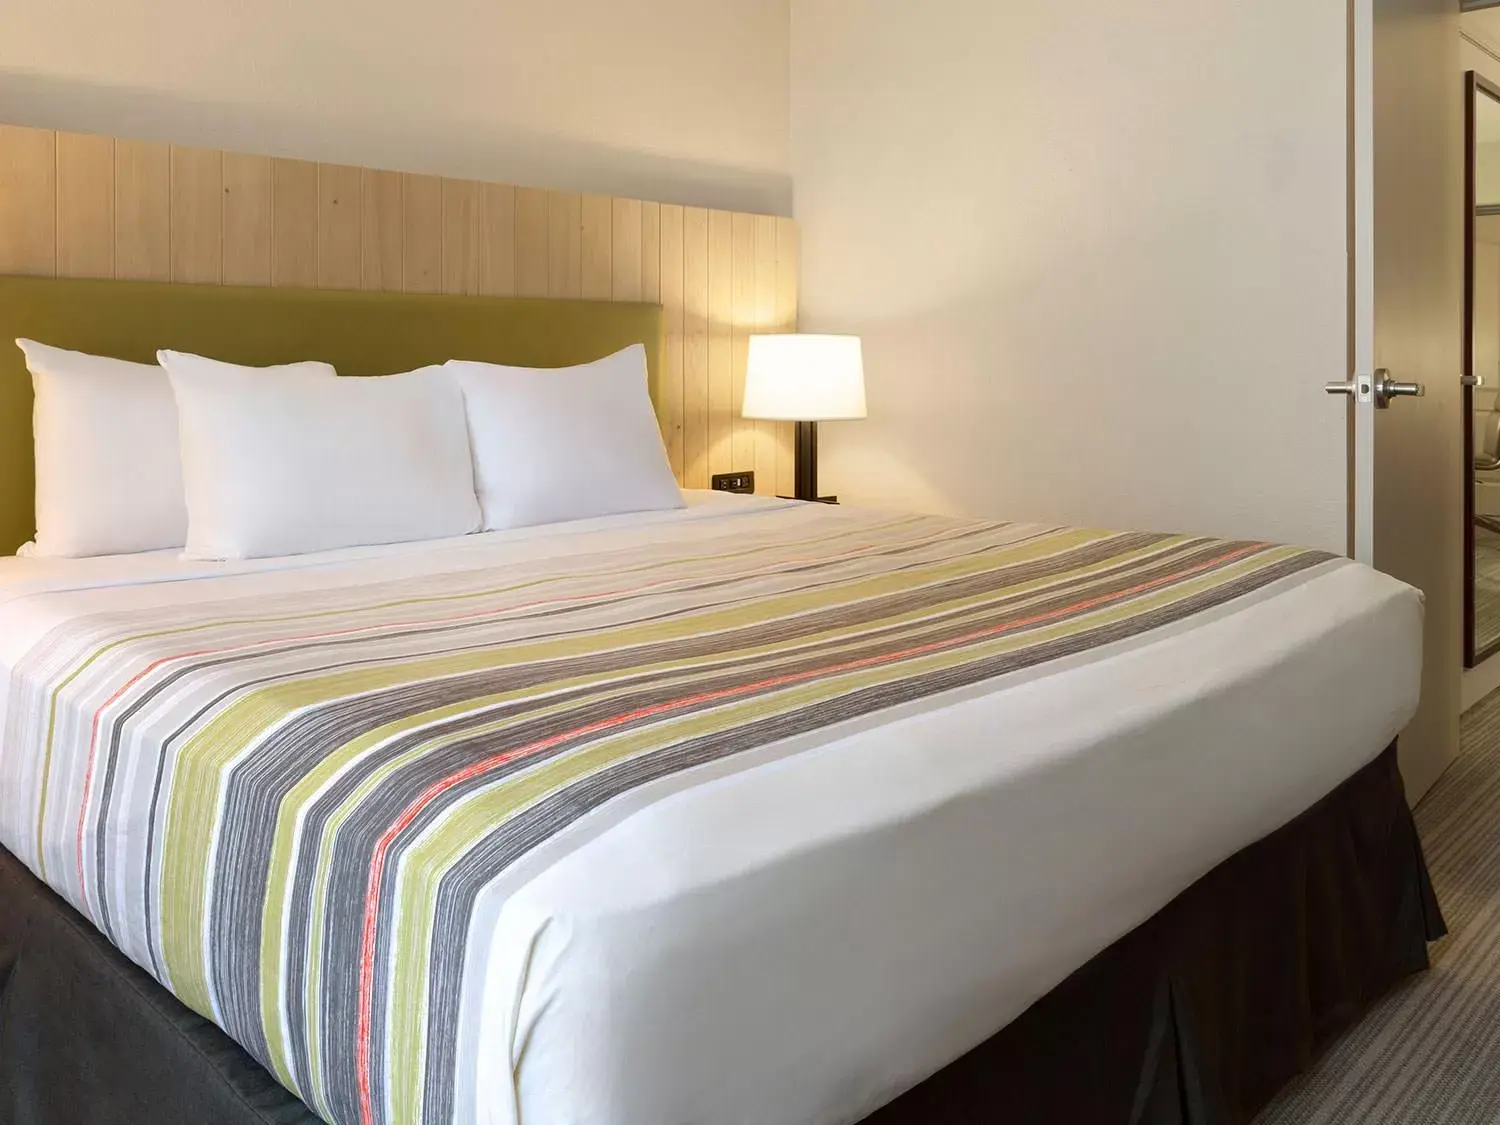 Bed in Country Inn & Suites by Radisson, Dahlgren-King George, VA